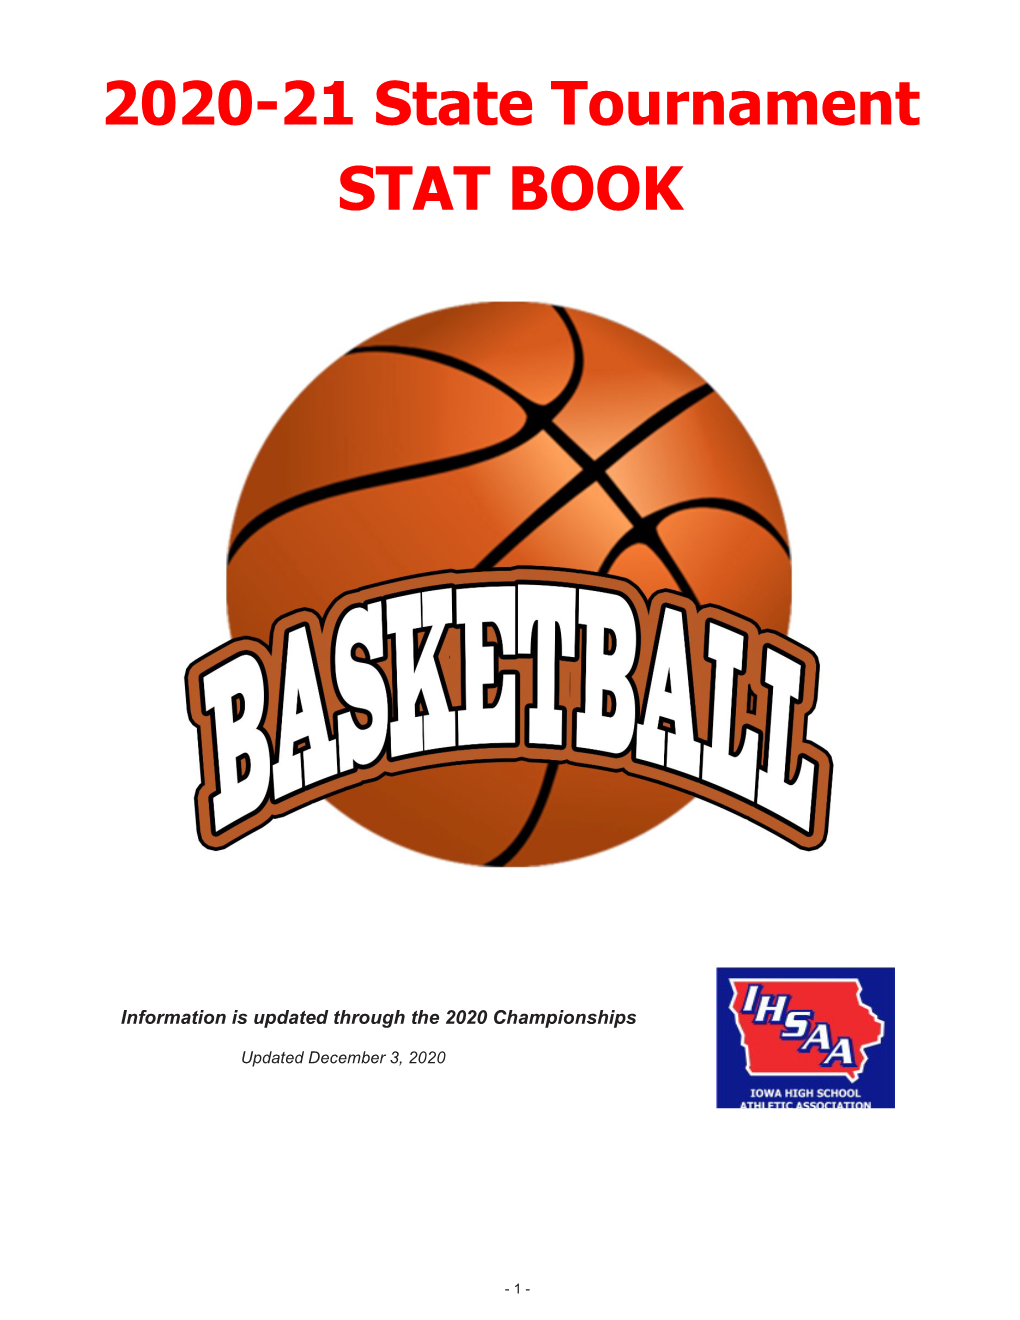 2020-21 State Tournament STAT BOOK